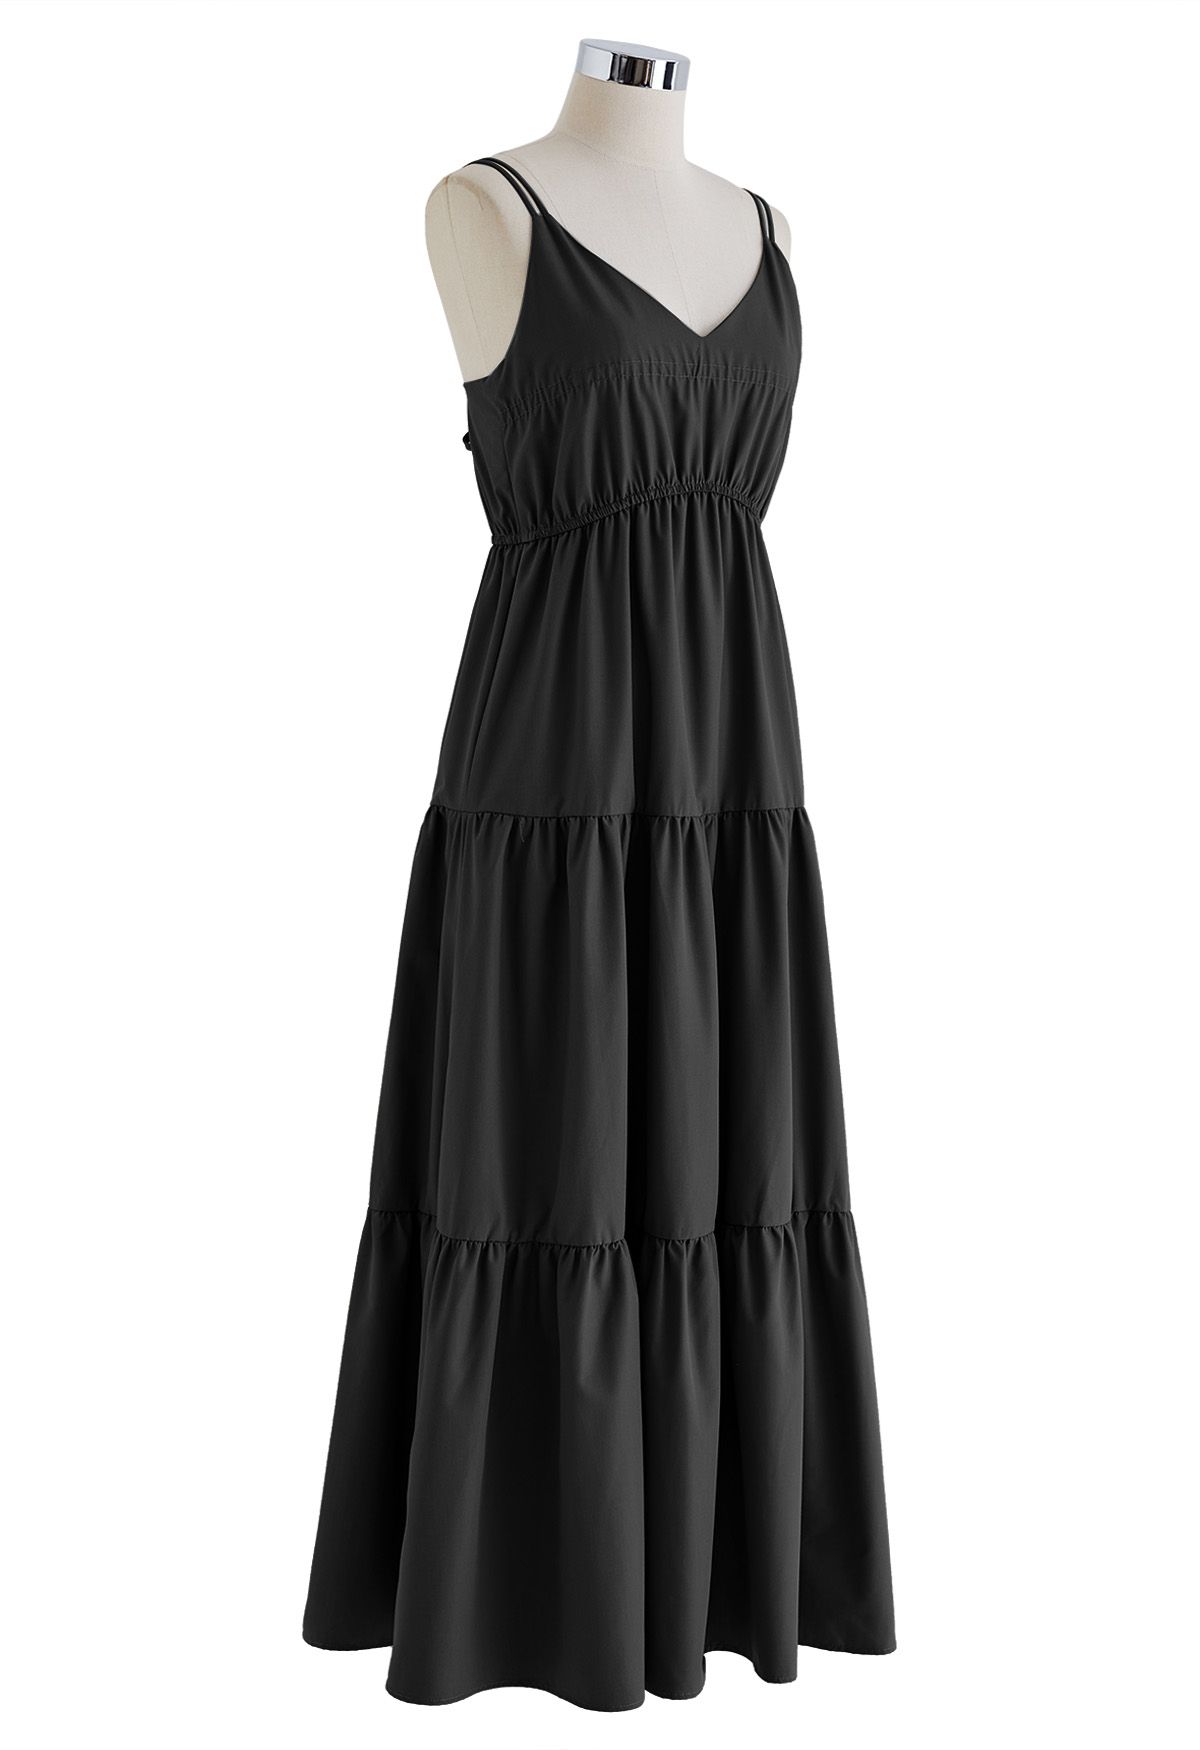 Double Straps Tie-Back Cami Dress in Black - Retro, Indie and Unique ...